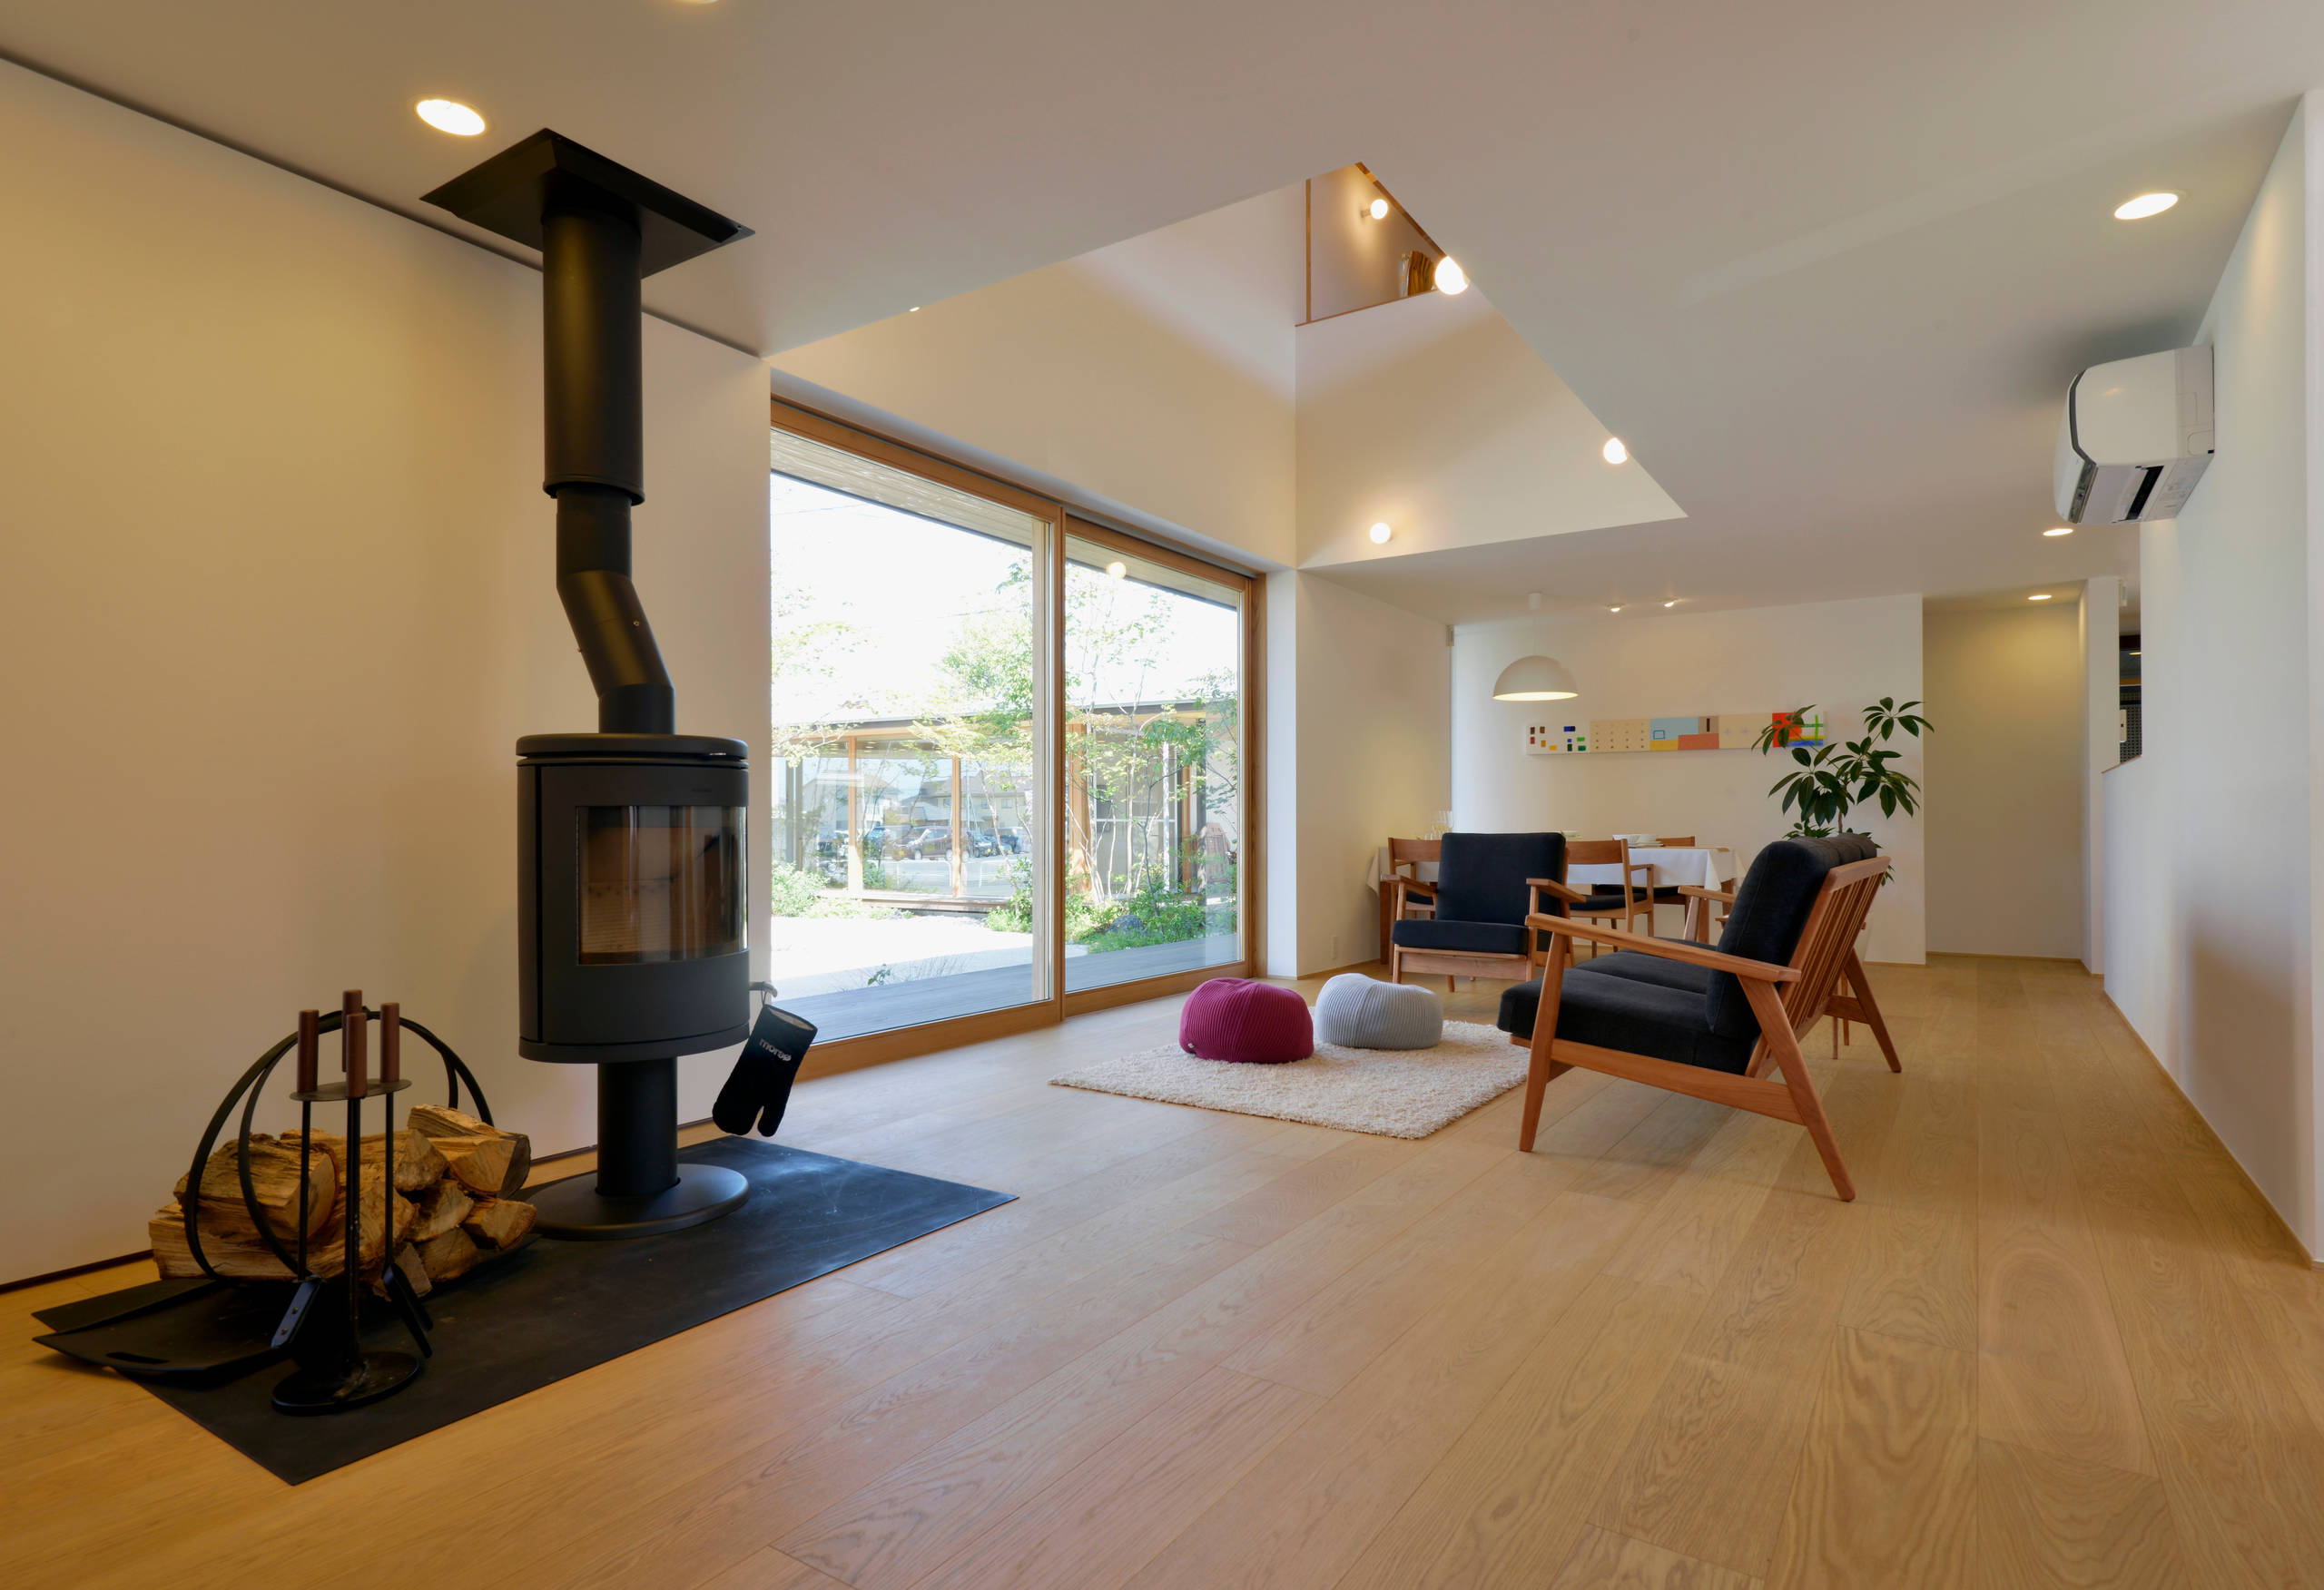 Top Populer Living Room Designs